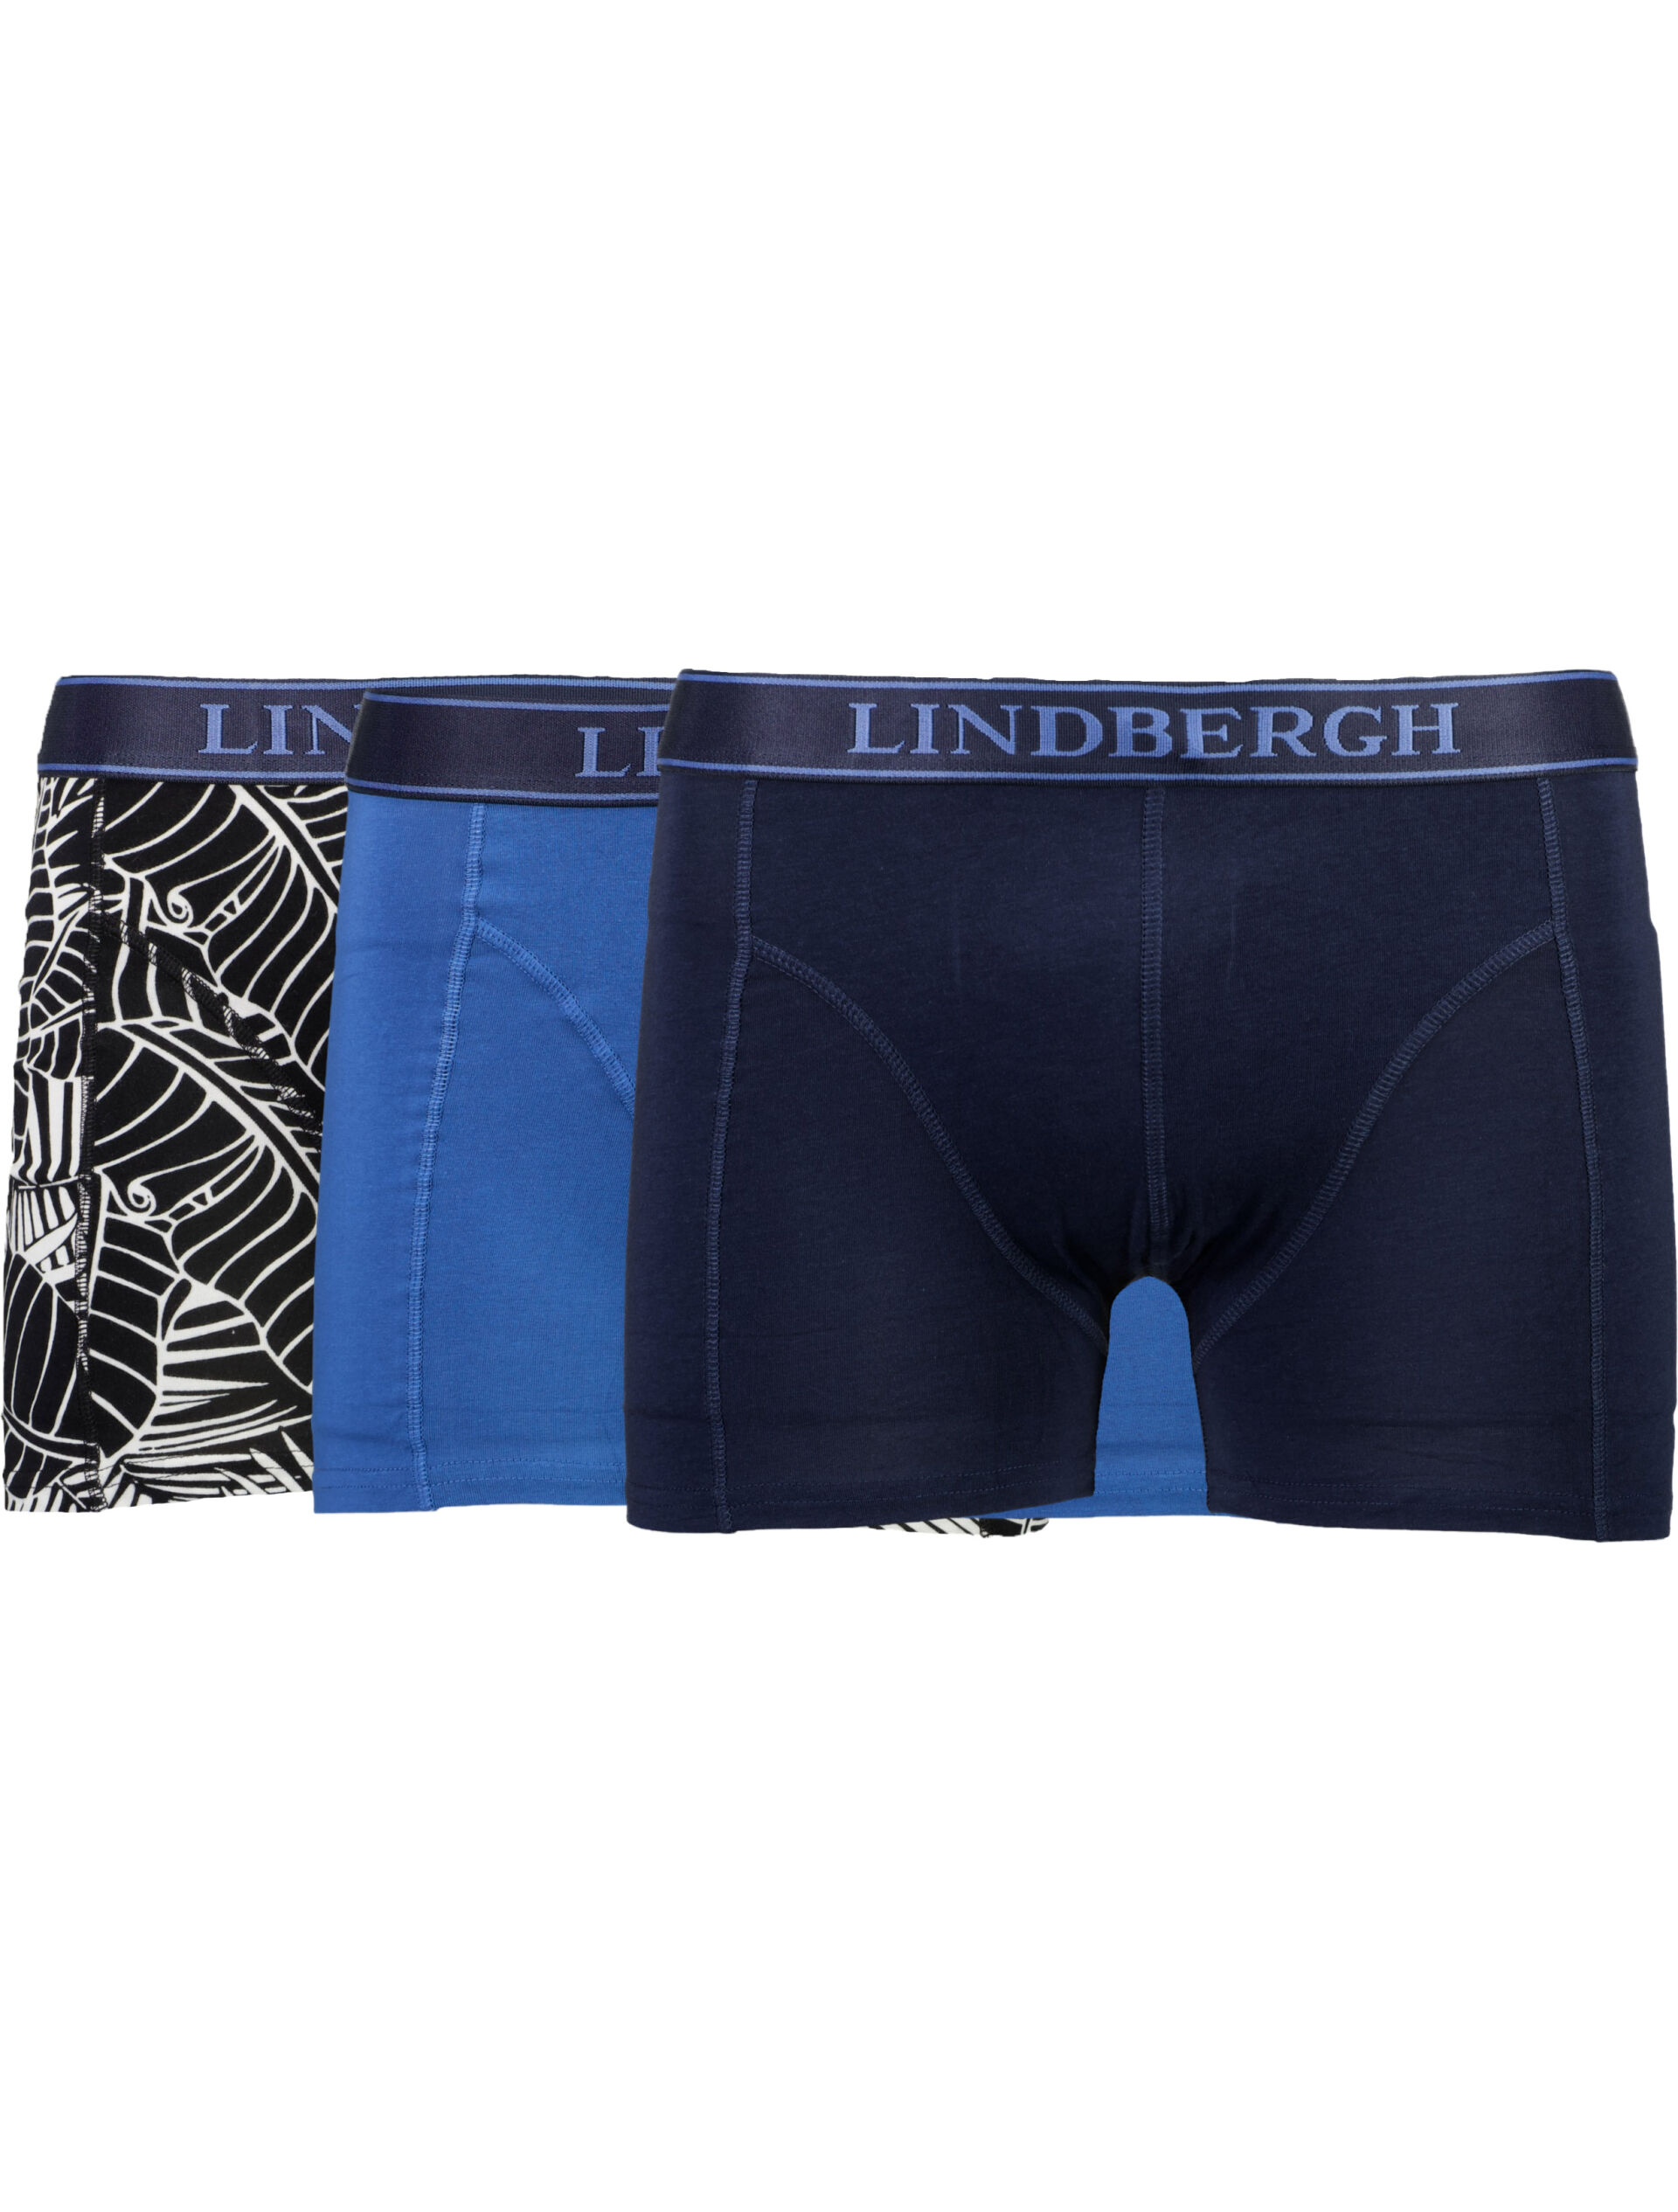 Lindbergh  | 3-pack 30-996025